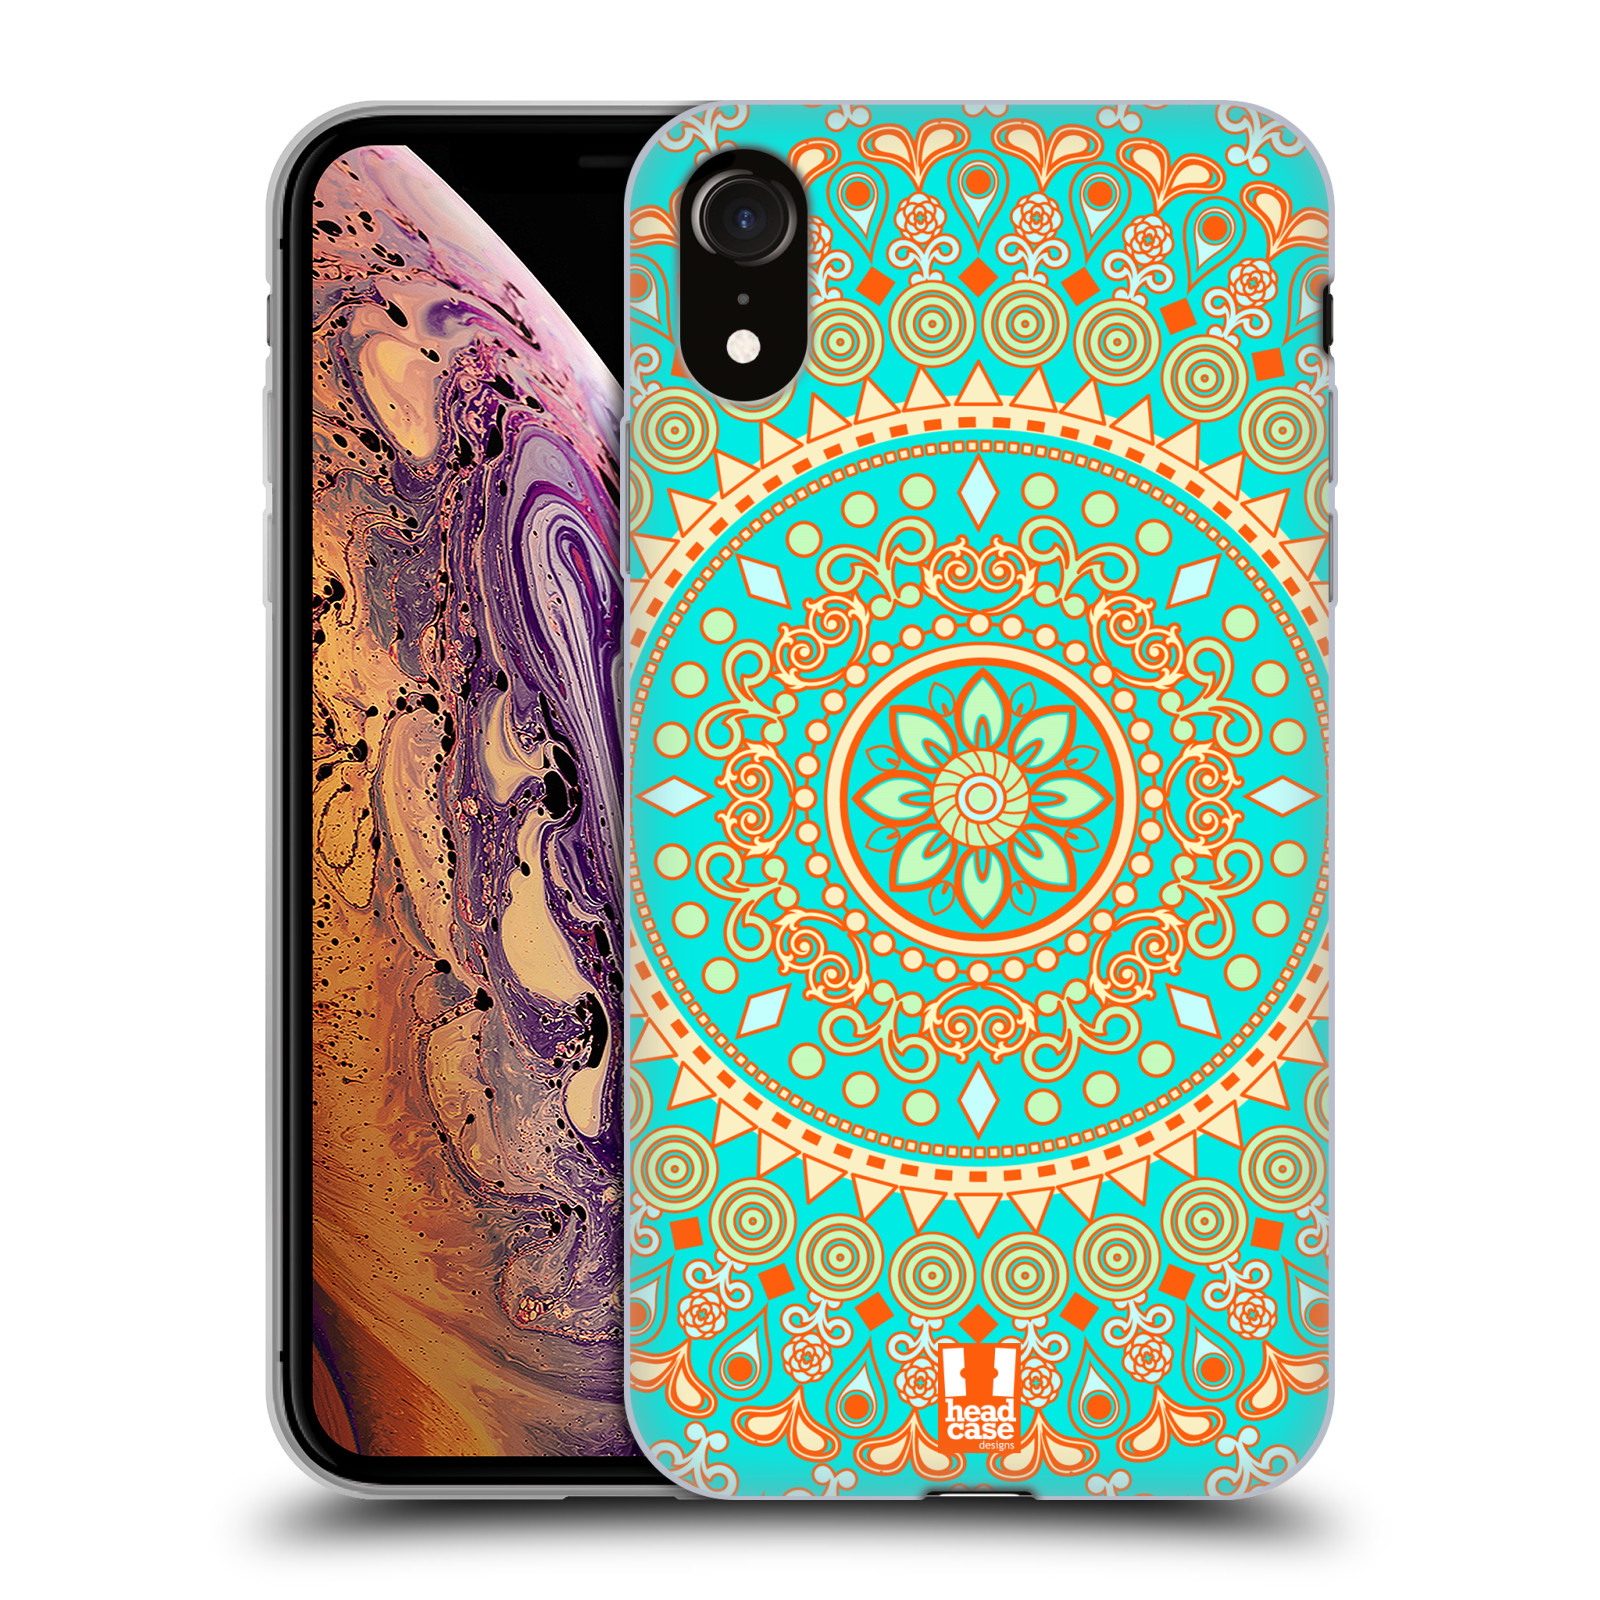 HEAD CASE silikon obal na mobil Apple Iphone XR vzor Indie Mandala slunce barevný motiv TYRKYSOVÁ, ZELENÁ